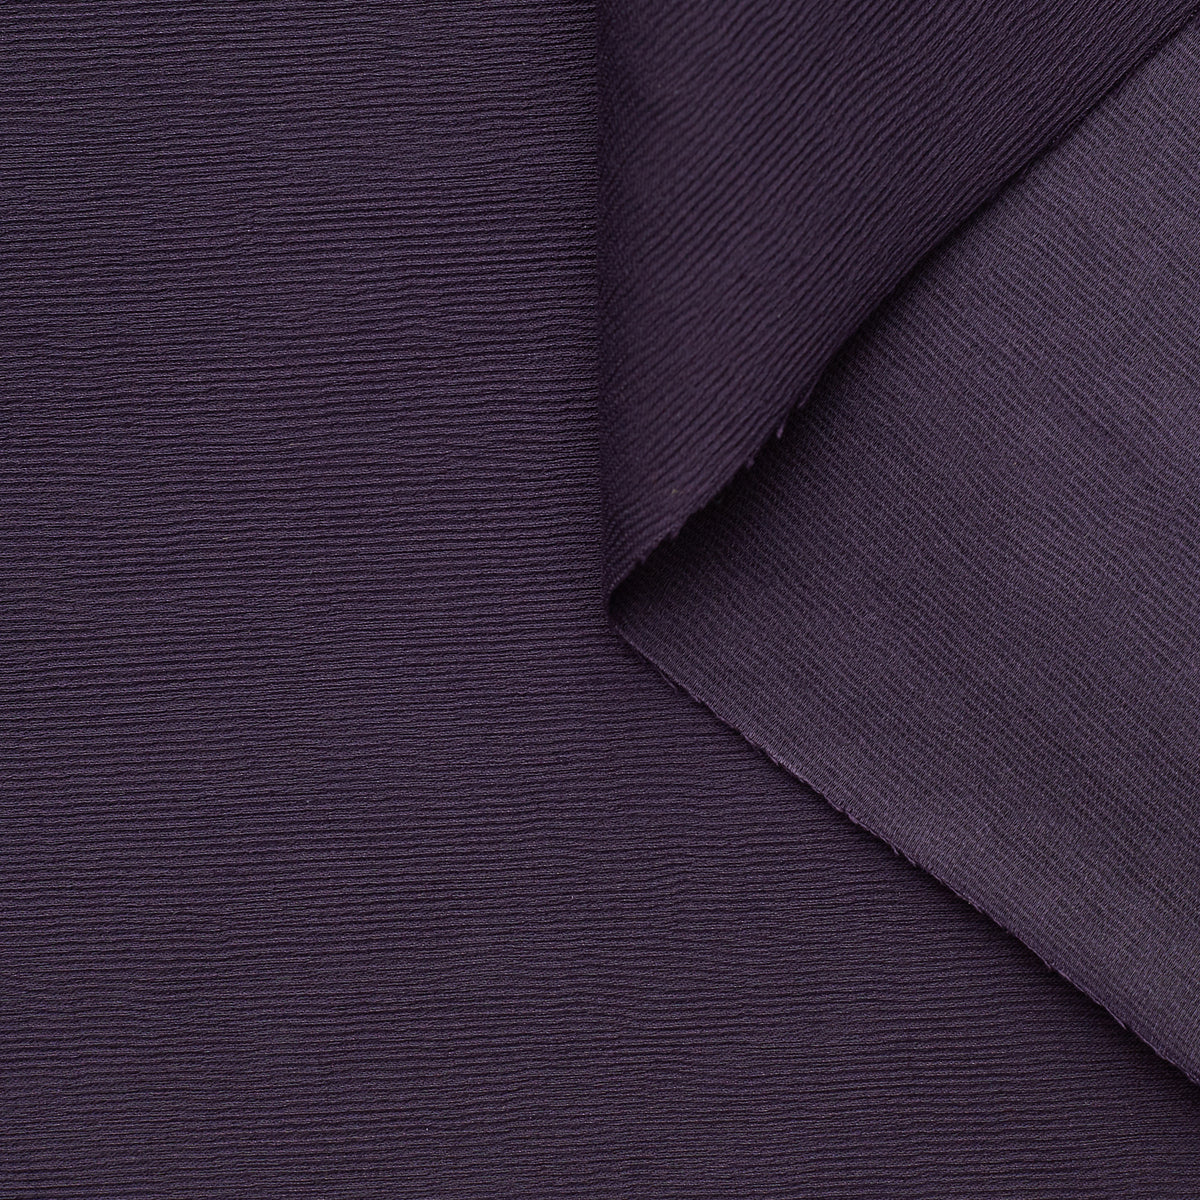 T22Q03255 | Textured Trevira Fabric